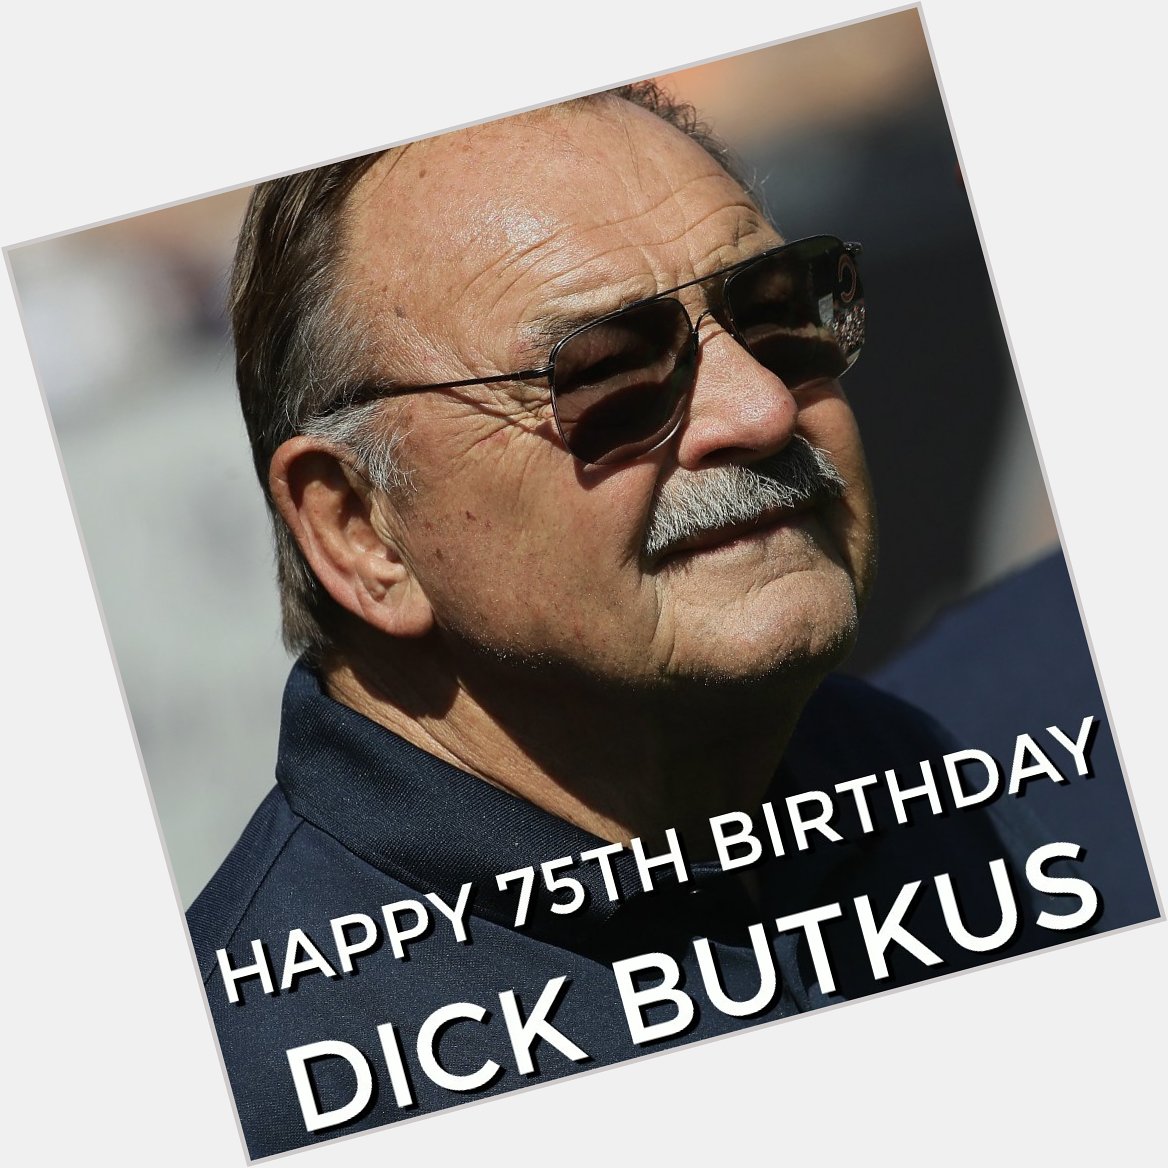 HAPPY BIRTHDAY DICK BUTKUS! The legend is celebrating his 75th birthday today!    